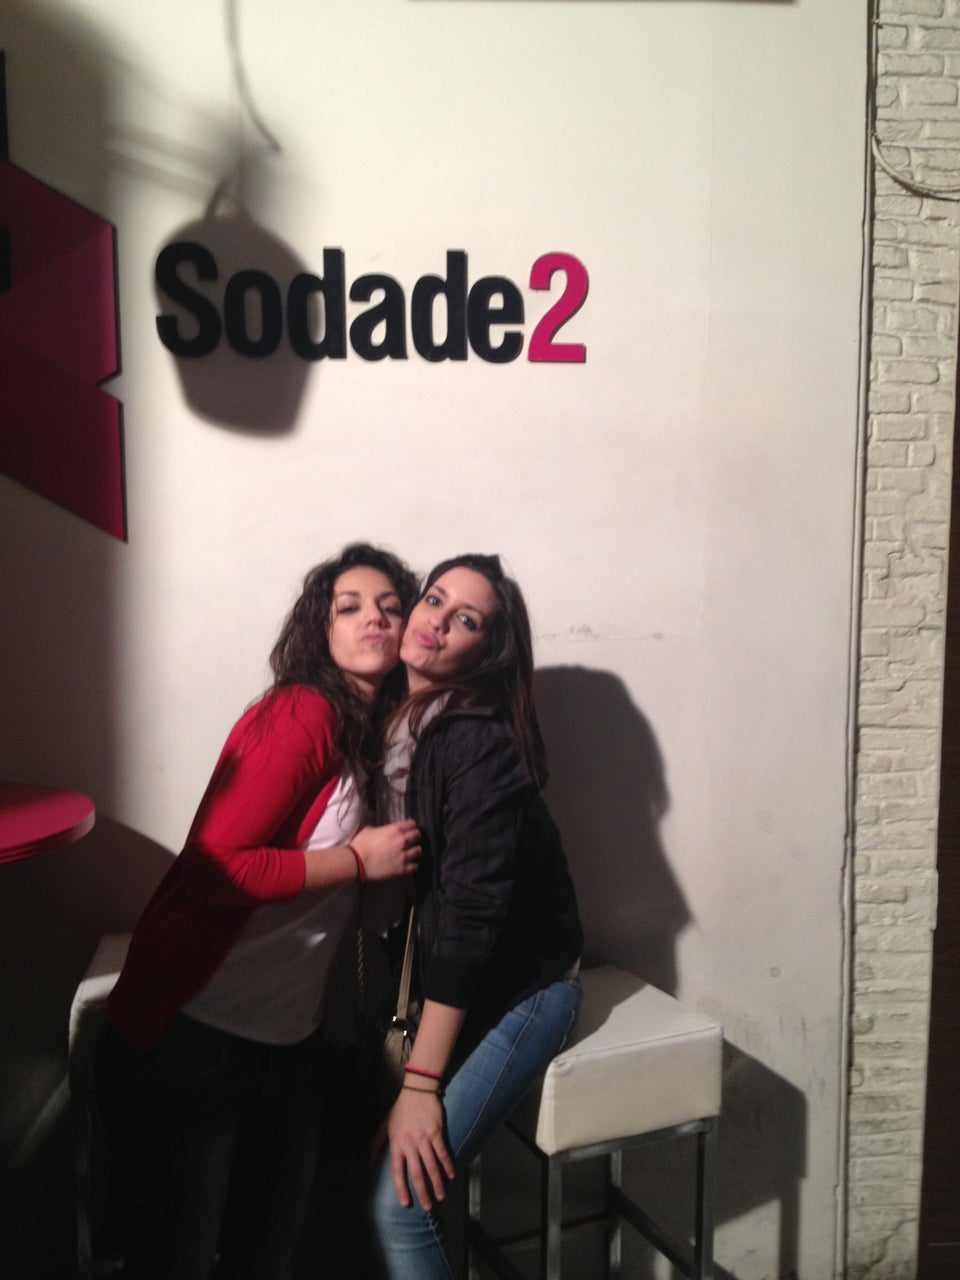 Photo of Sodade 2